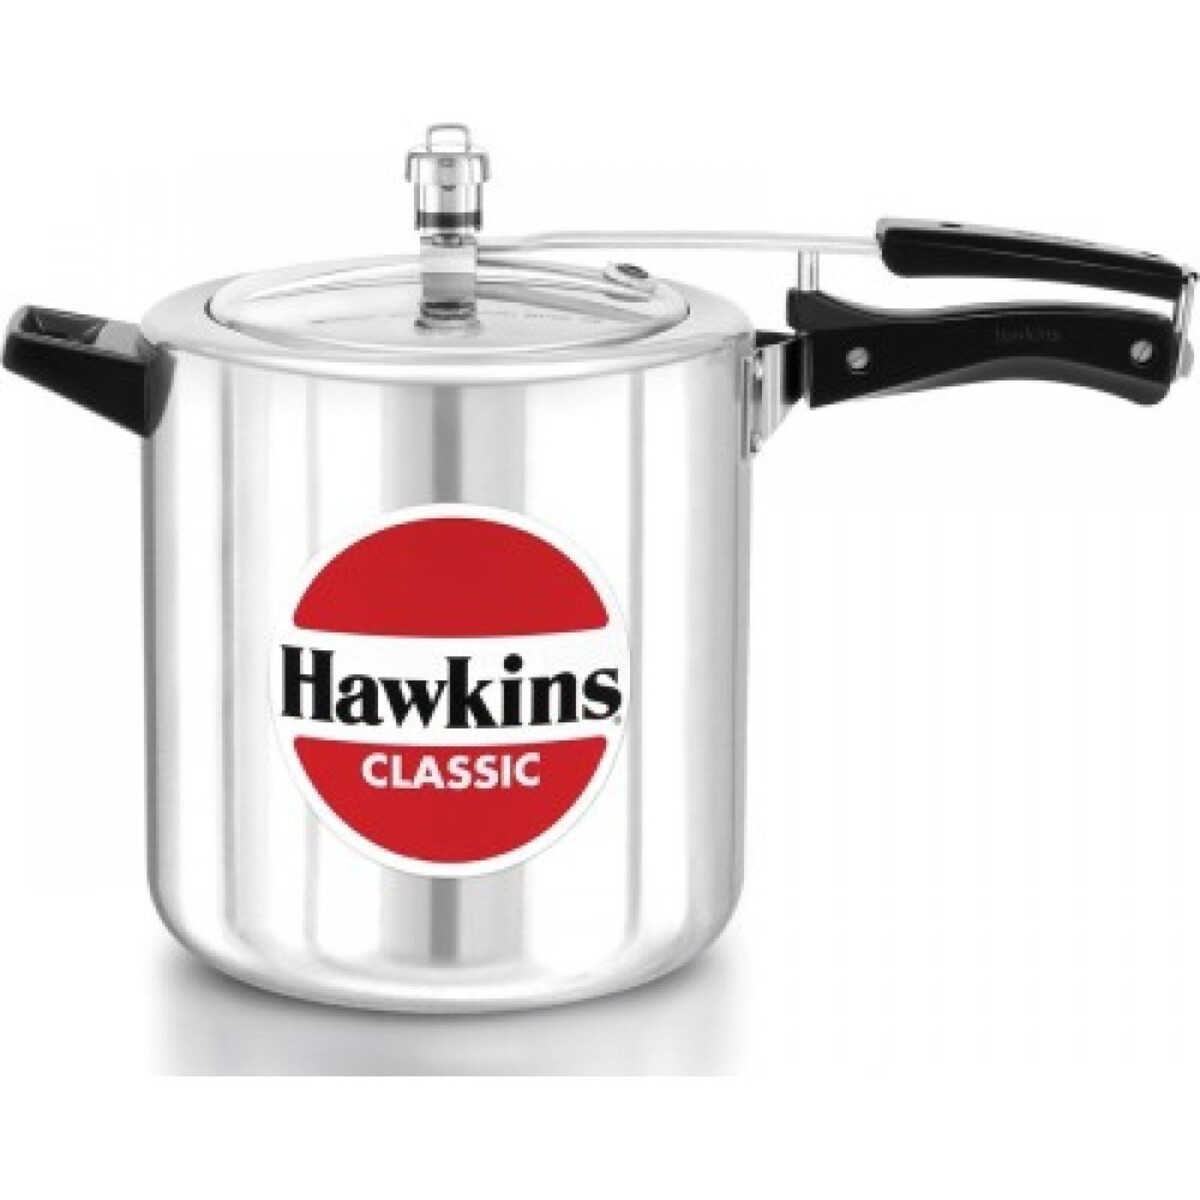 Hawkins Pressure Cooker Classic CL8T 8 Ltr